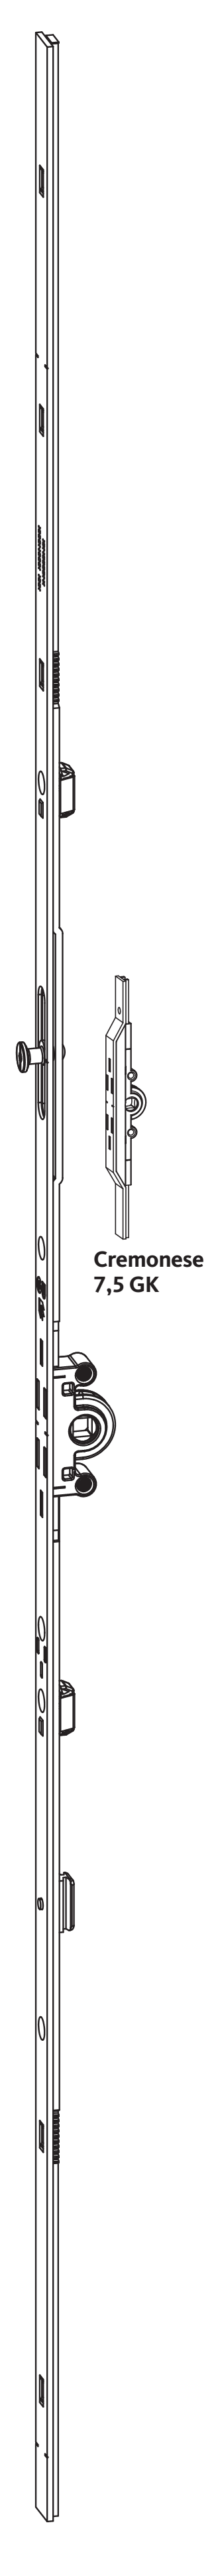 GU-ITALIA -  Cremonese UNI-JET anta a bandiera altezza maniglia variabile prolungabile senza dss - gr / dim. 1130 - entrata 7,5 - alt. man. 975 - 1225 - lbb/hbb 1951 - 2450